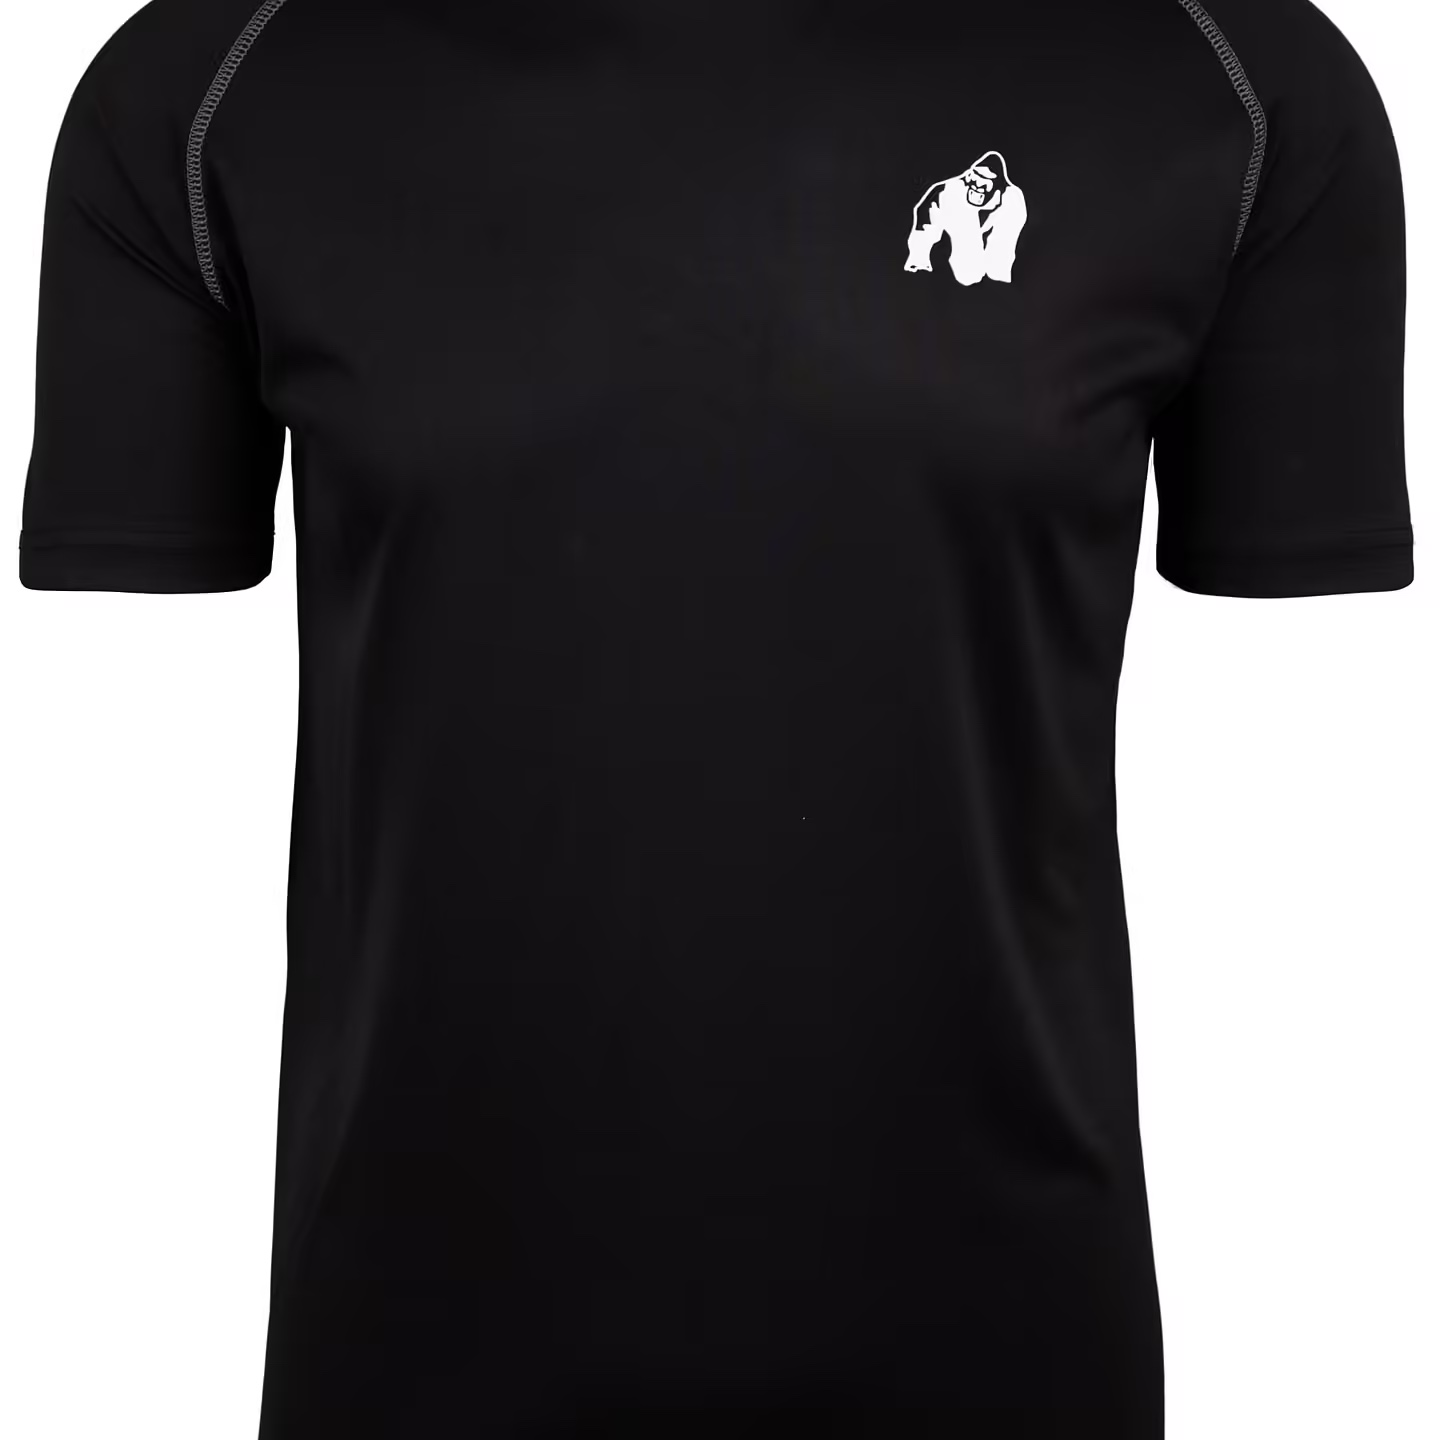 Gorilla Wear - Performance T-shirt, black/grey